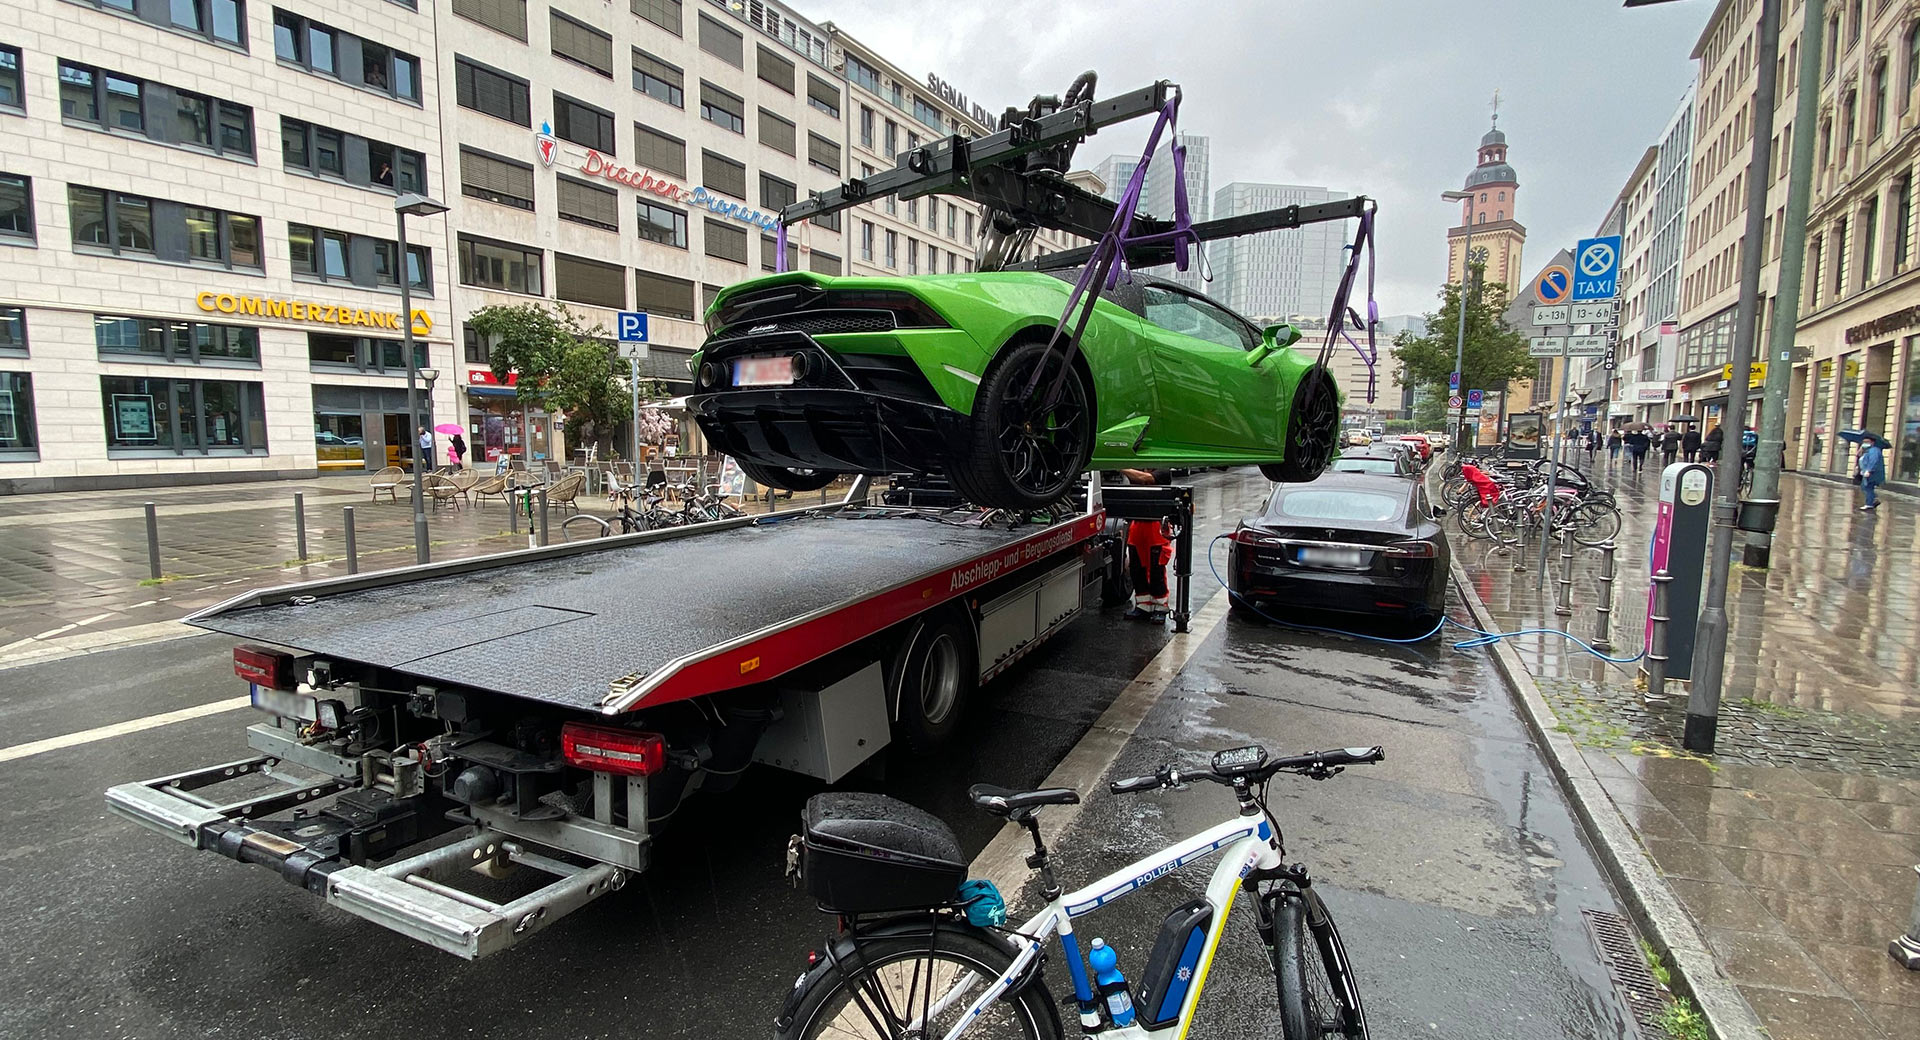 https://www.carscoops.com/wp-content/uploads/2020/07/Lamborghini-Huracan-Spyder-2.jpg